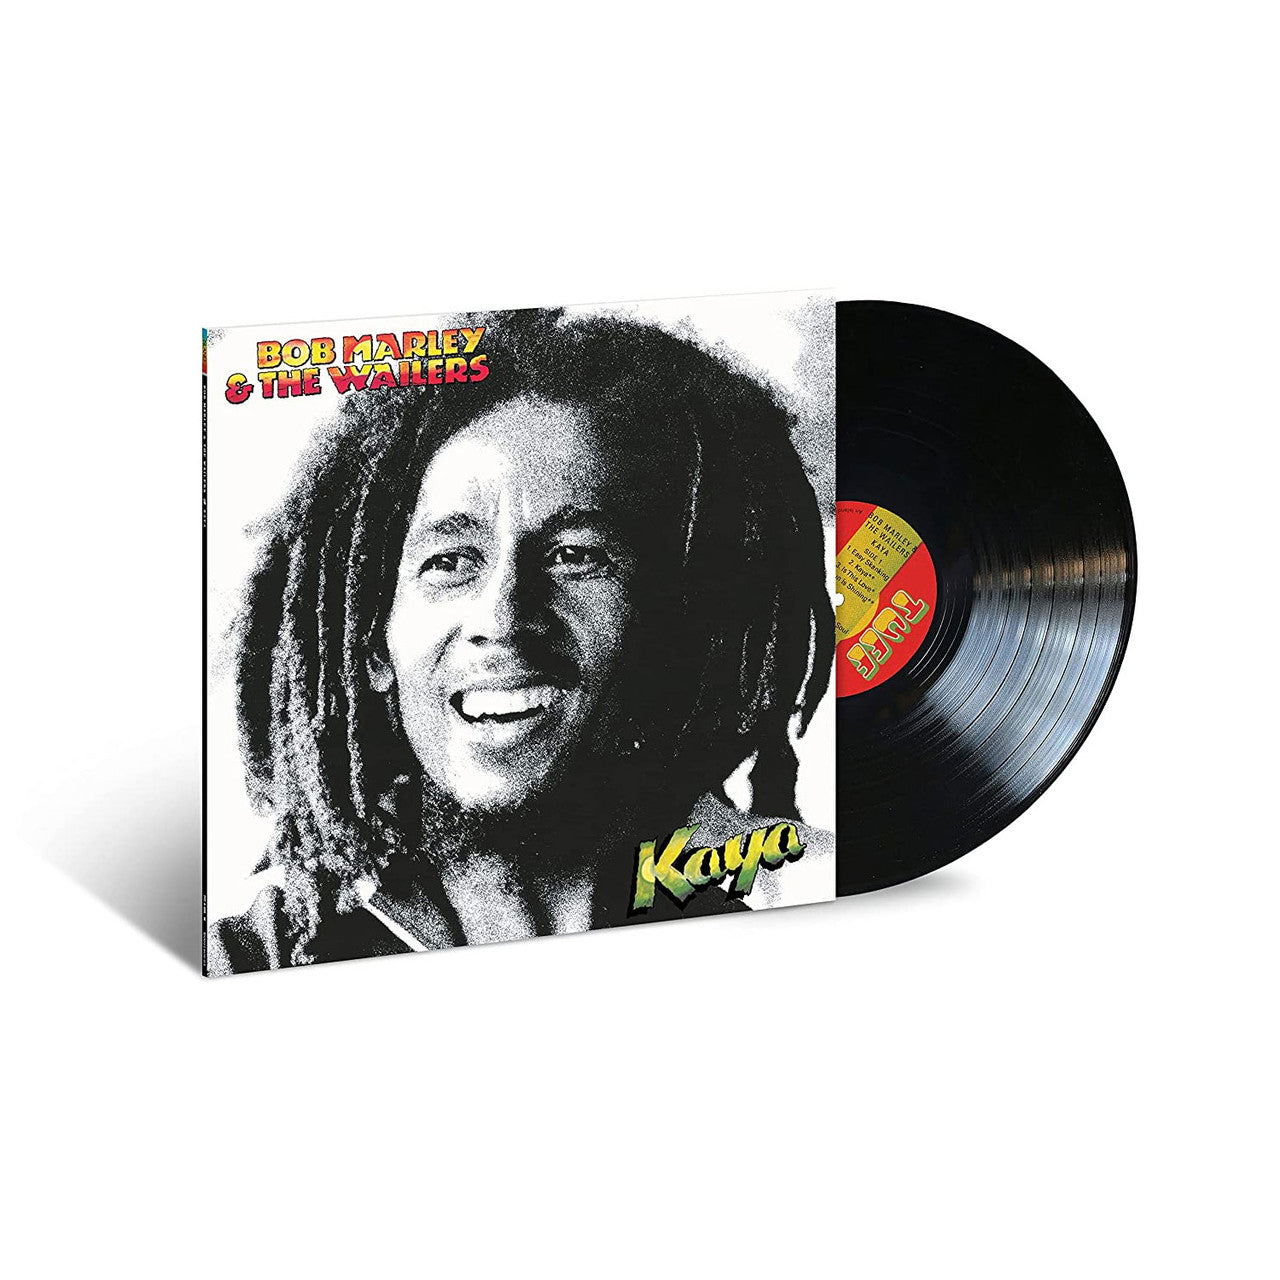 Bob Marley & the Wailers - Kaya - Tuff Gong LP